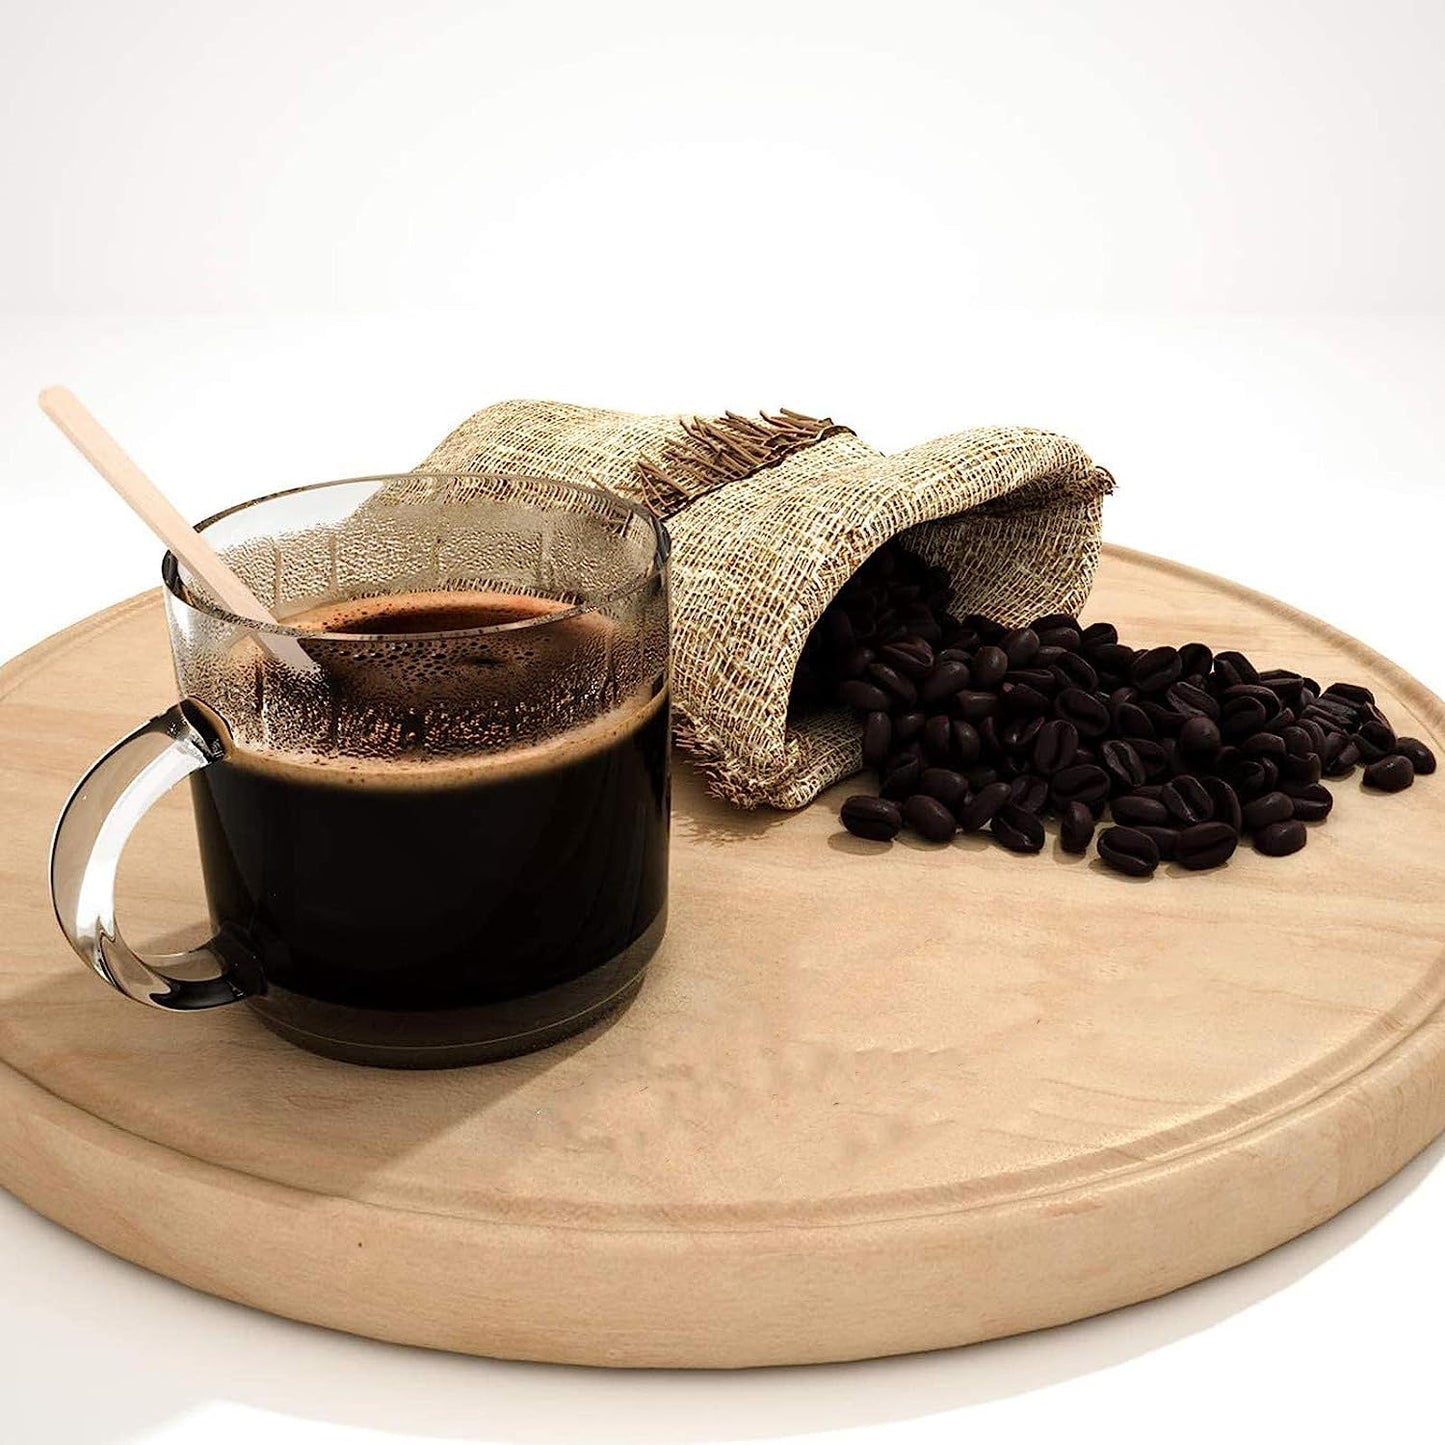 Wholesale Bulk Wooden Coffee Stirrers 1000 pcs – 5.5 inch (140mm)